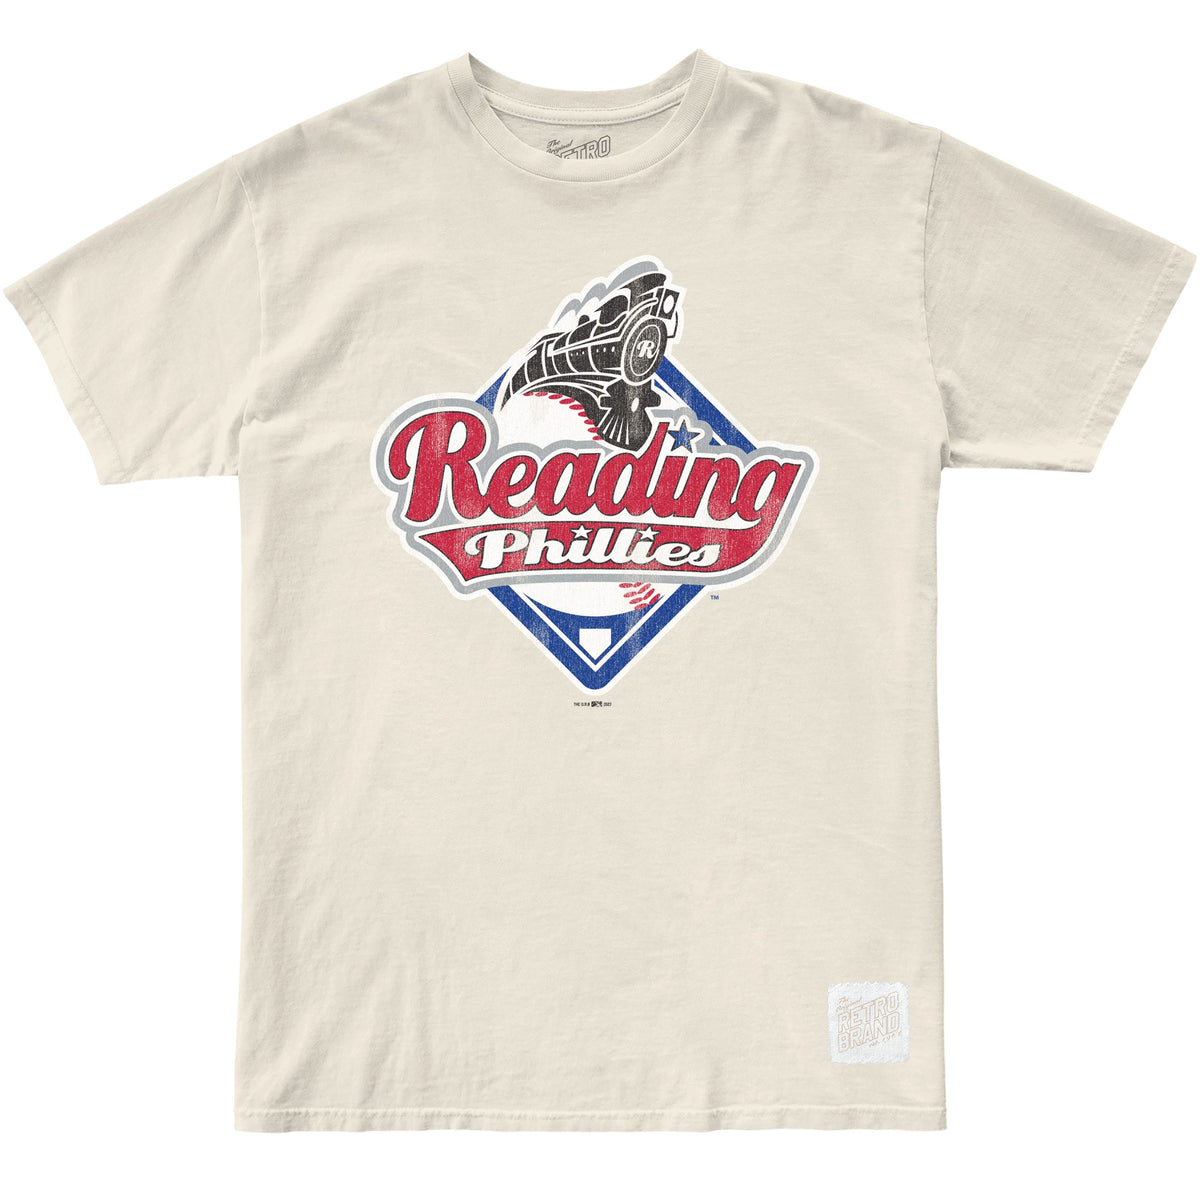 Mr Brady Vintage Ph.i.lli.e.s Baseball Style 90s Sweatshirt, Vintage Ph.il.a.d.e.l.p.h.i.a Baseball Shirt, Retro P.h.i.l.l.i.e.s Tshirt, Vintage Style Shirt